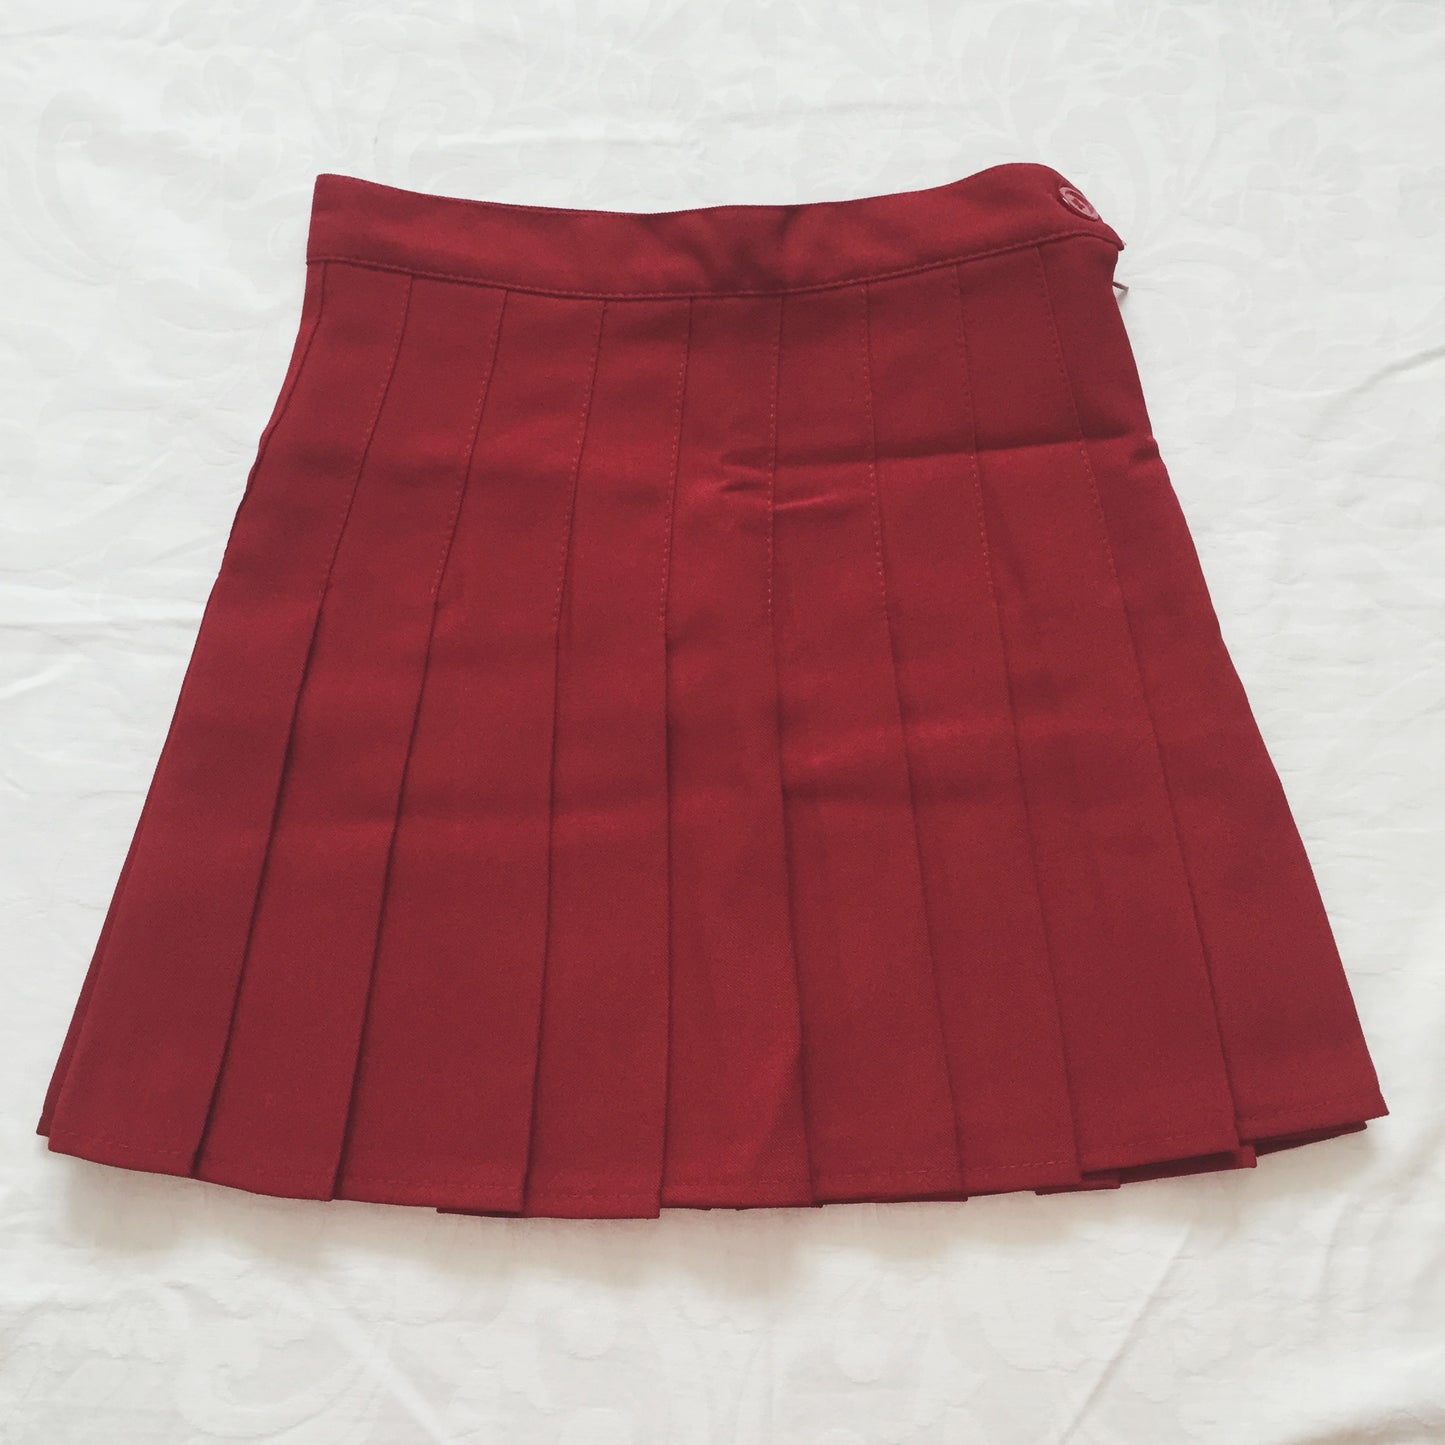 Pleated Tennis Skirt (5 Colors)